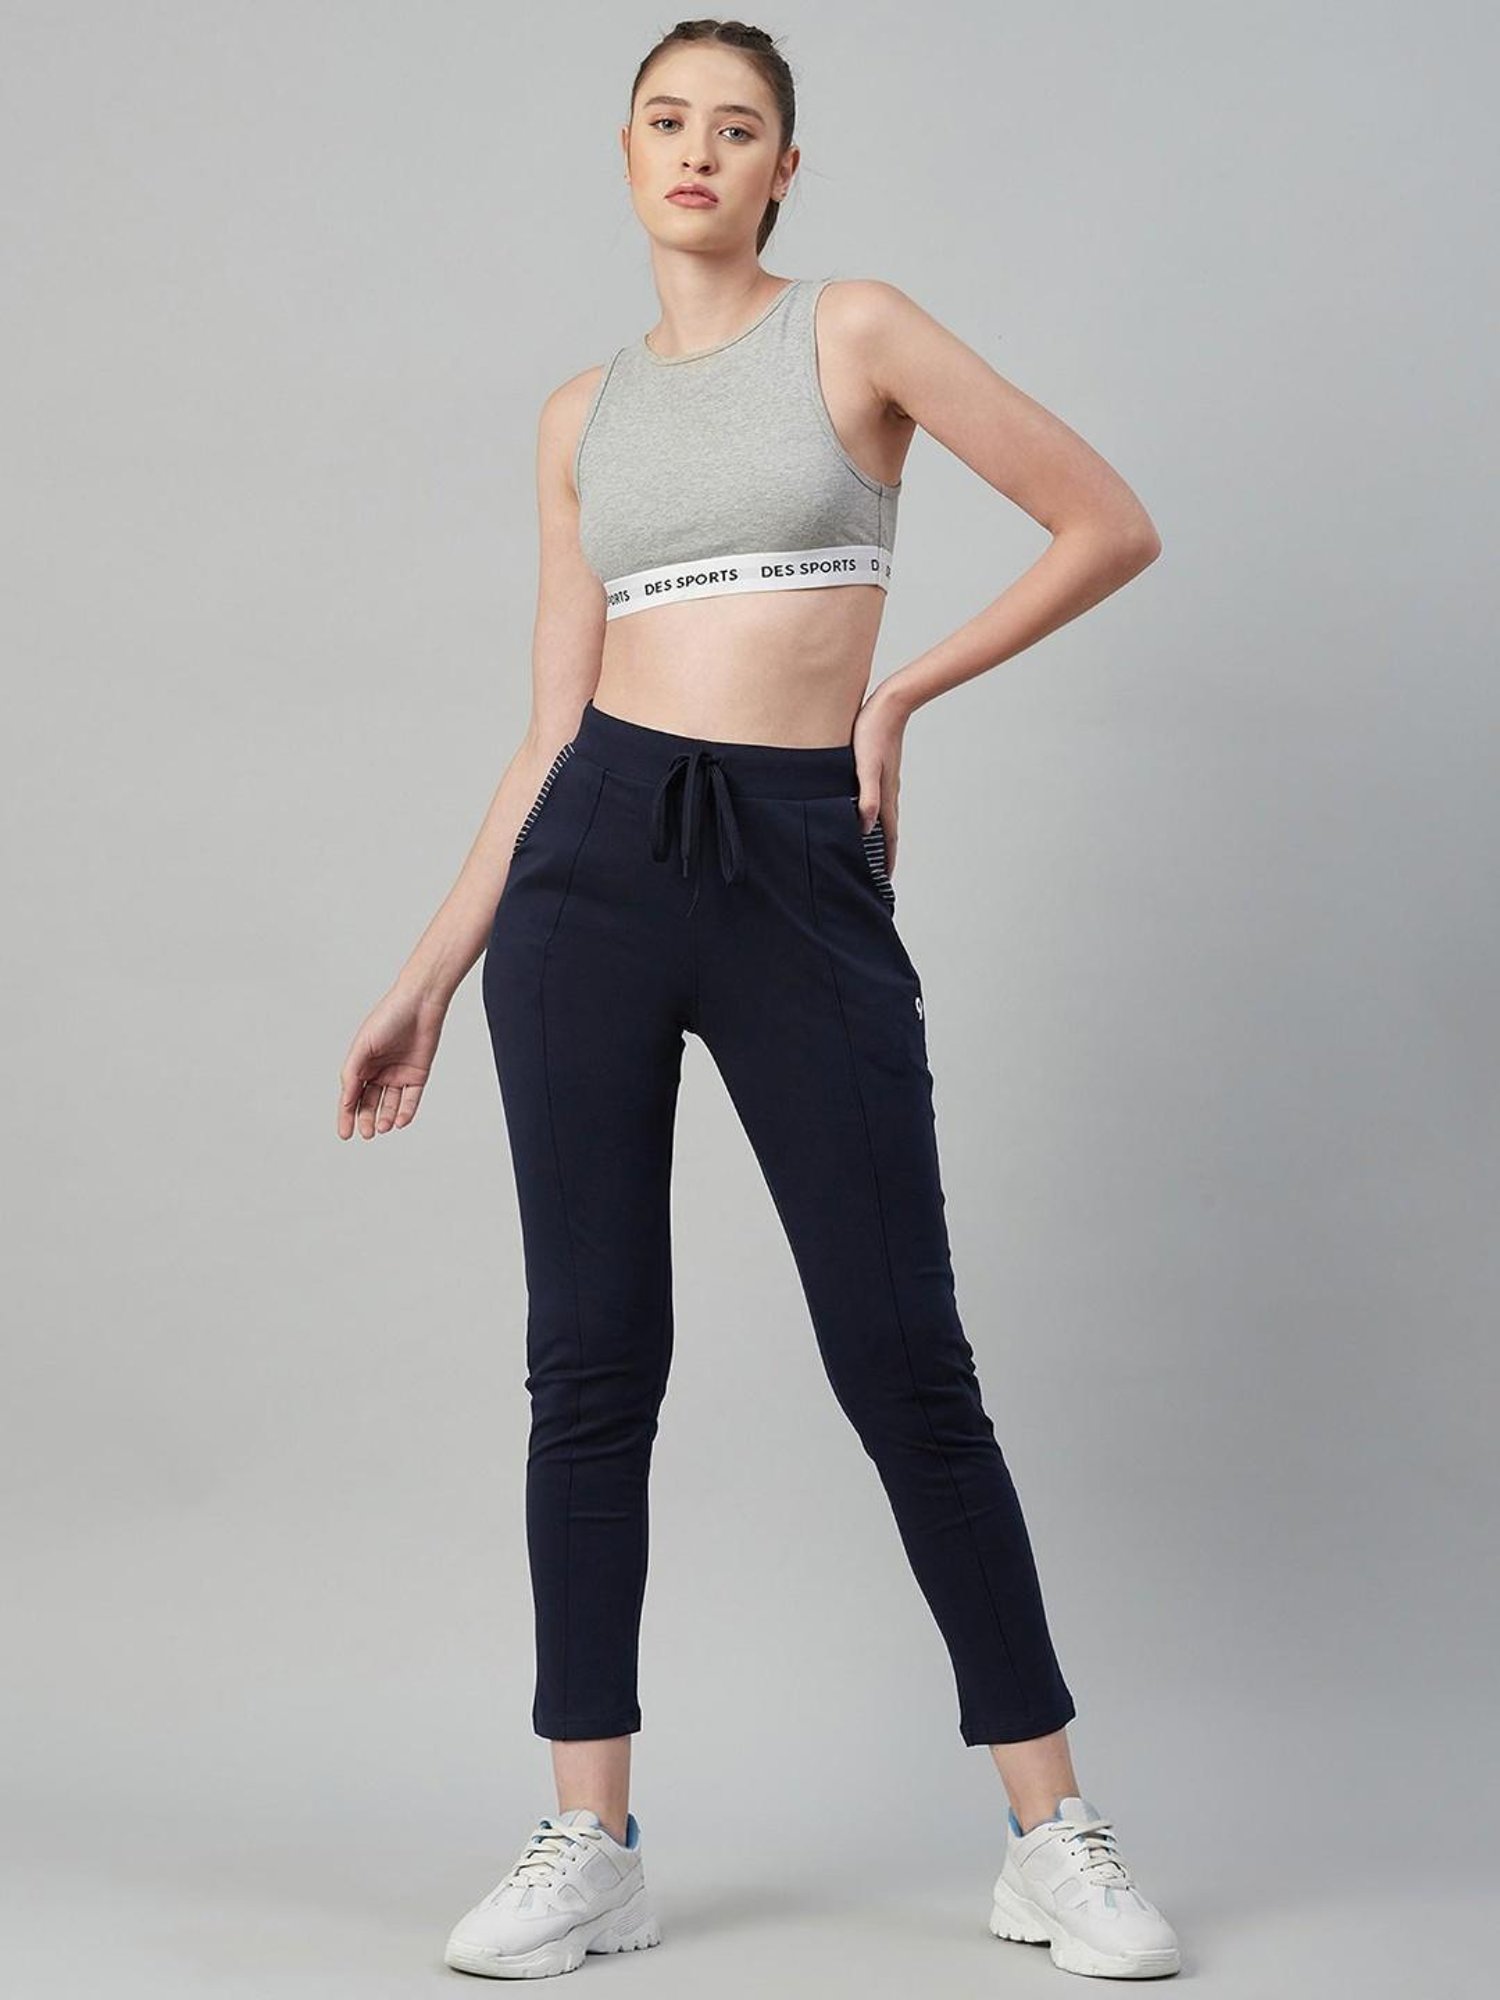 Buy C9 Airwear Navy Solid Slim Fit Yoga/Gymwear Track Pants For Women Online